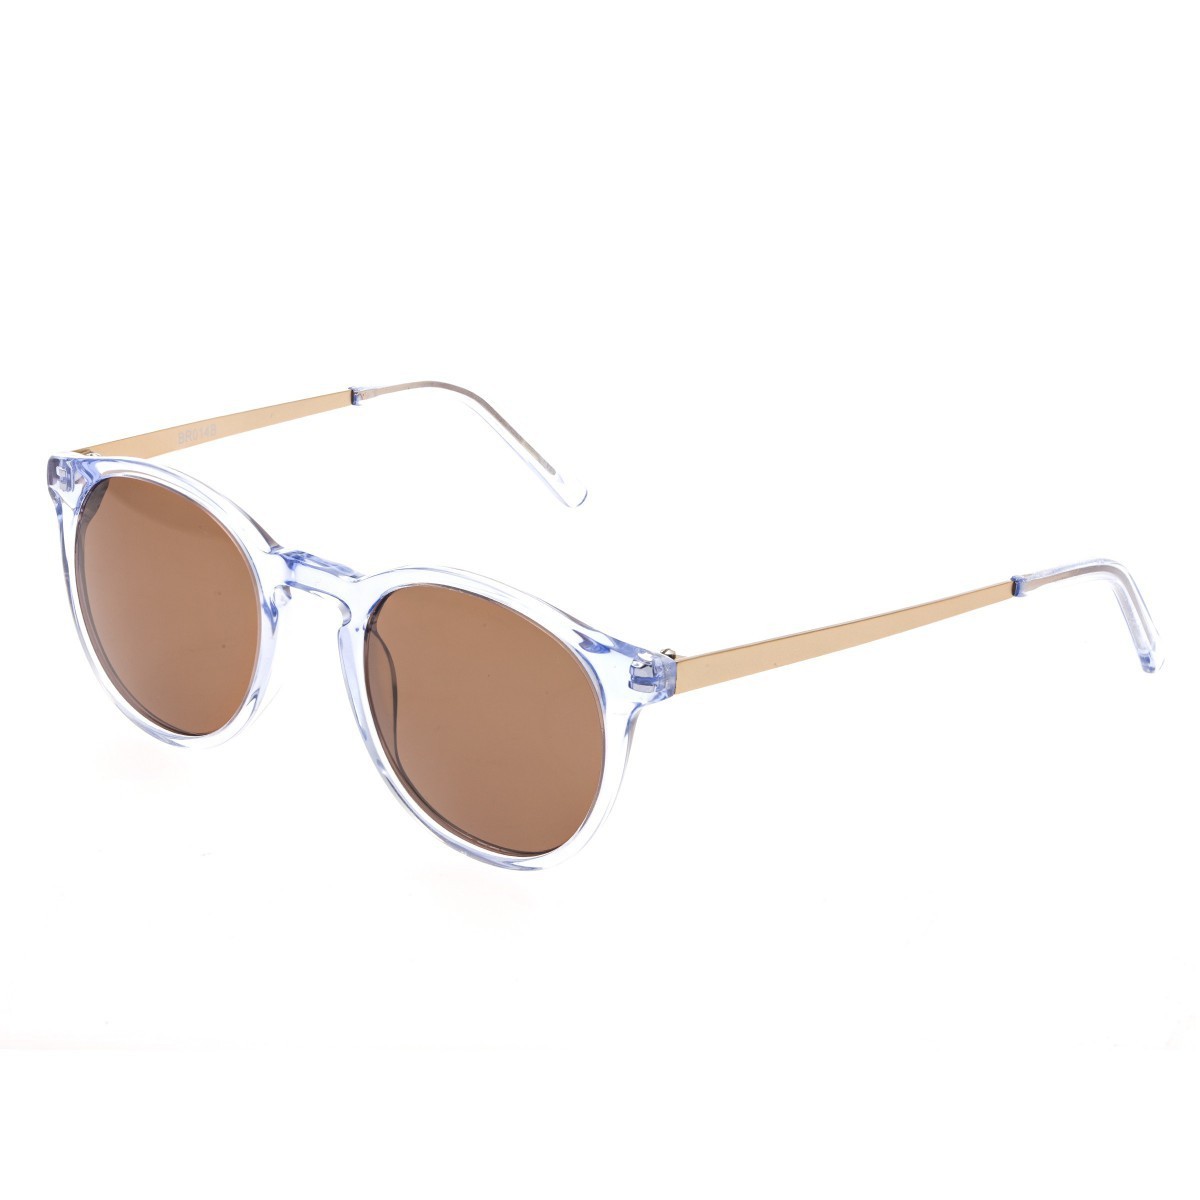 Bertha Hayley Polarized Sunglasses - Blue/Brown - Sunglasses